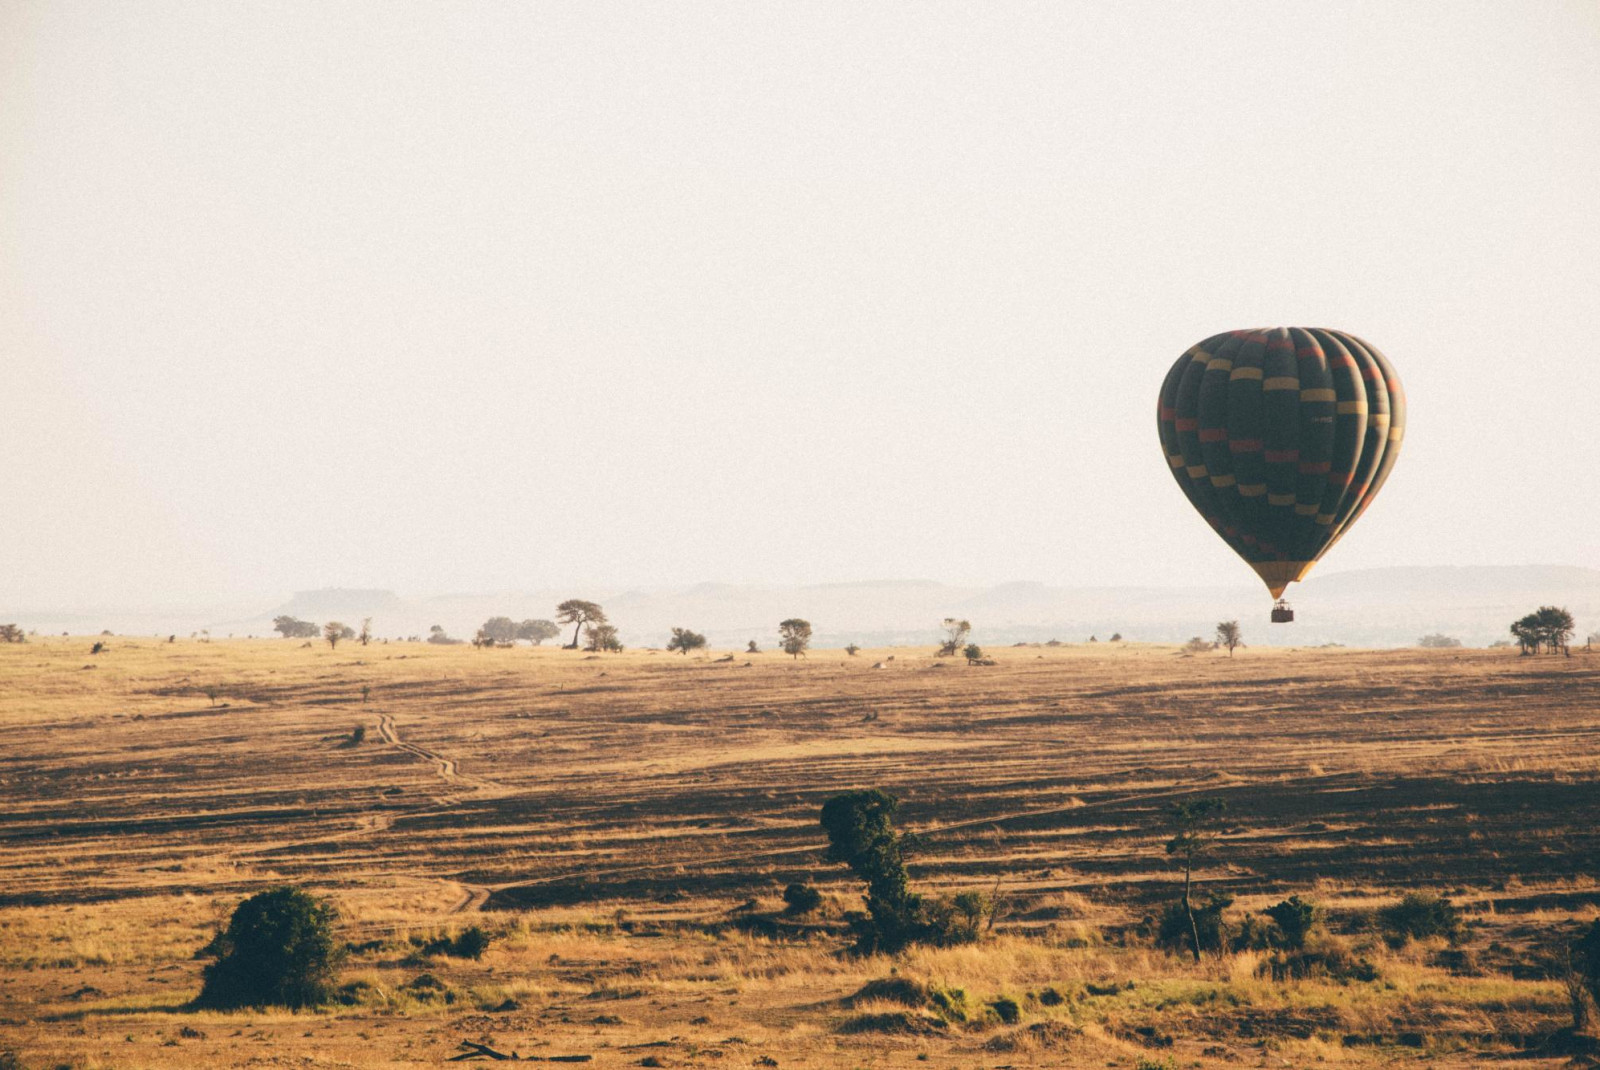 Hot air balloon safari over African plain in Serengeti, Tanzania. 